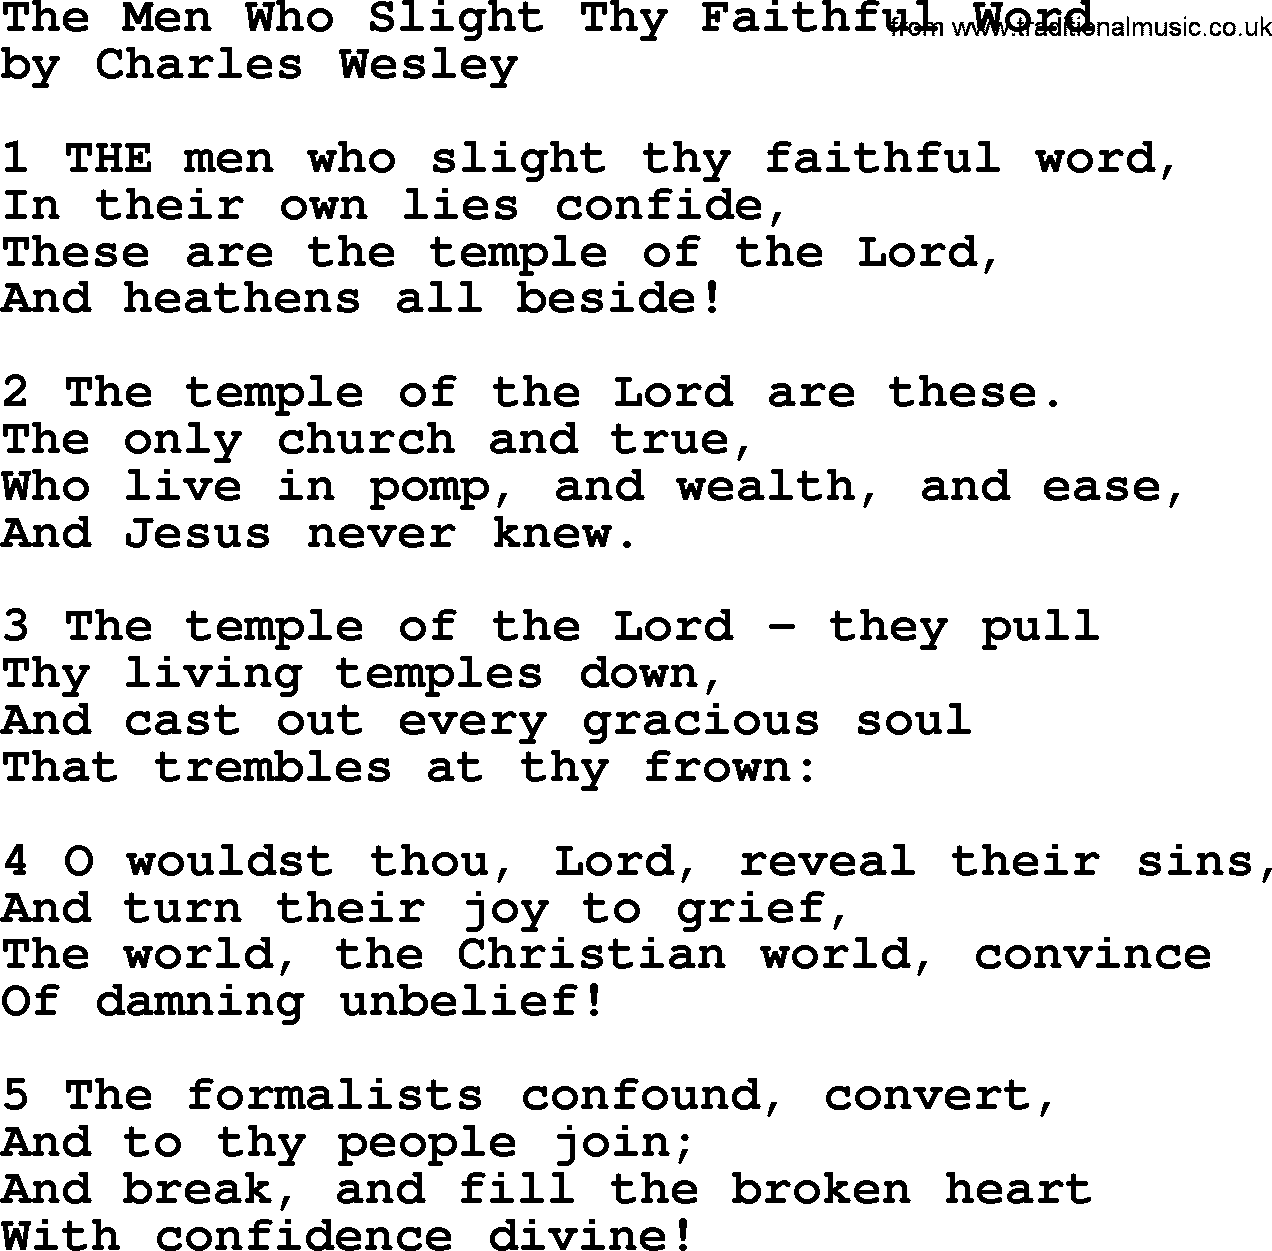 Charles Wesley hymn: The Men Who Slight Thy Faithful Word, lyrics